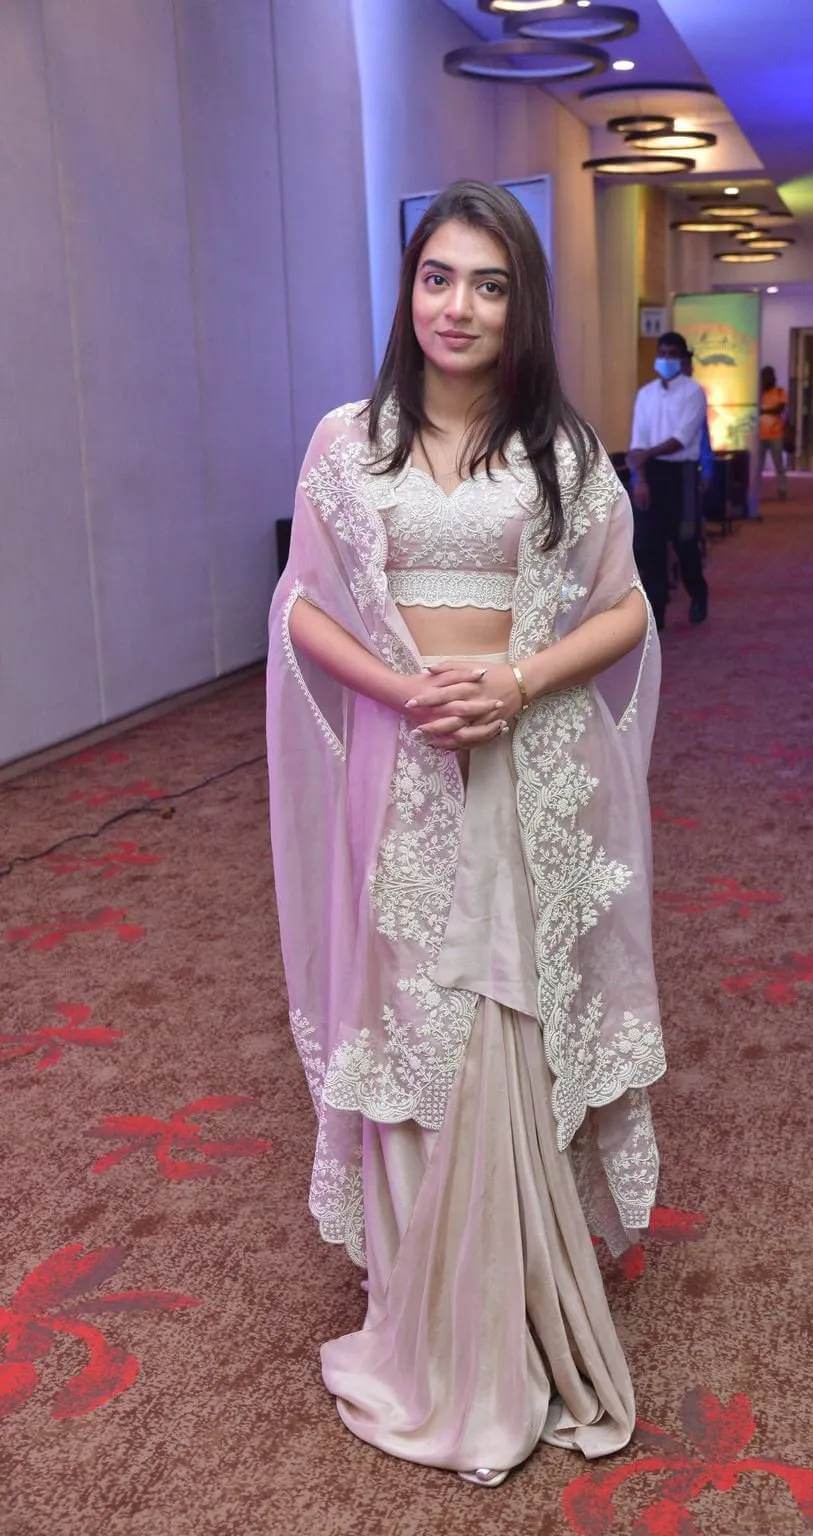 Malayalam beauty Nazriya Nazim In  Ivory Indo-western Outfit